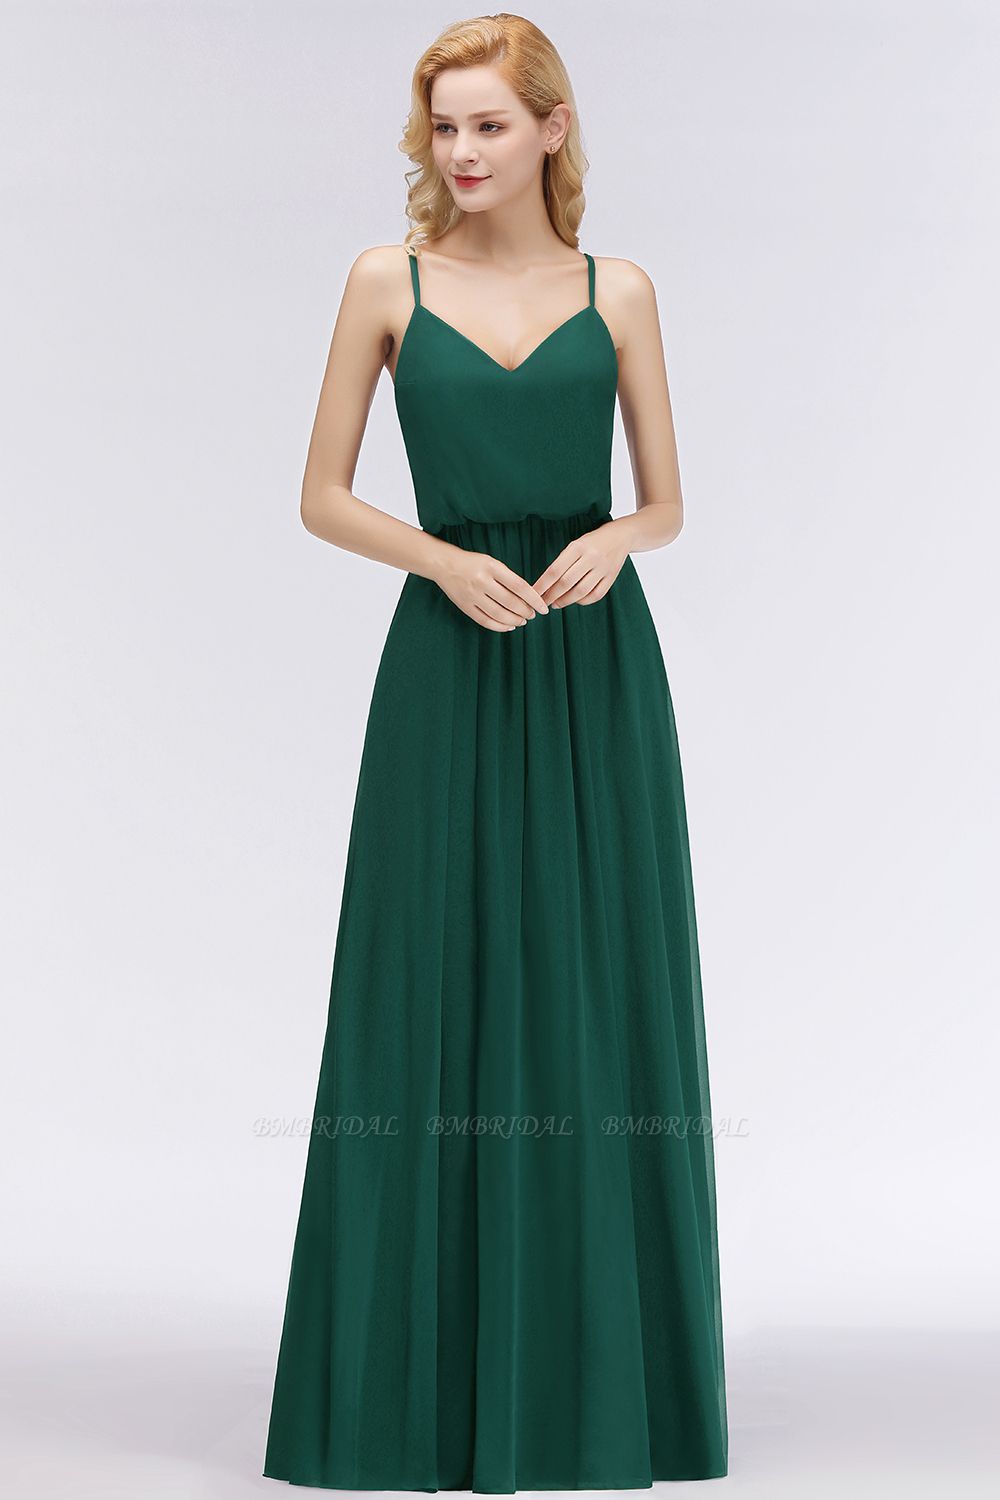 BMbridal Dark Green Chiffon Spaghetti-Straps Modest Bridesmaid Dress Online